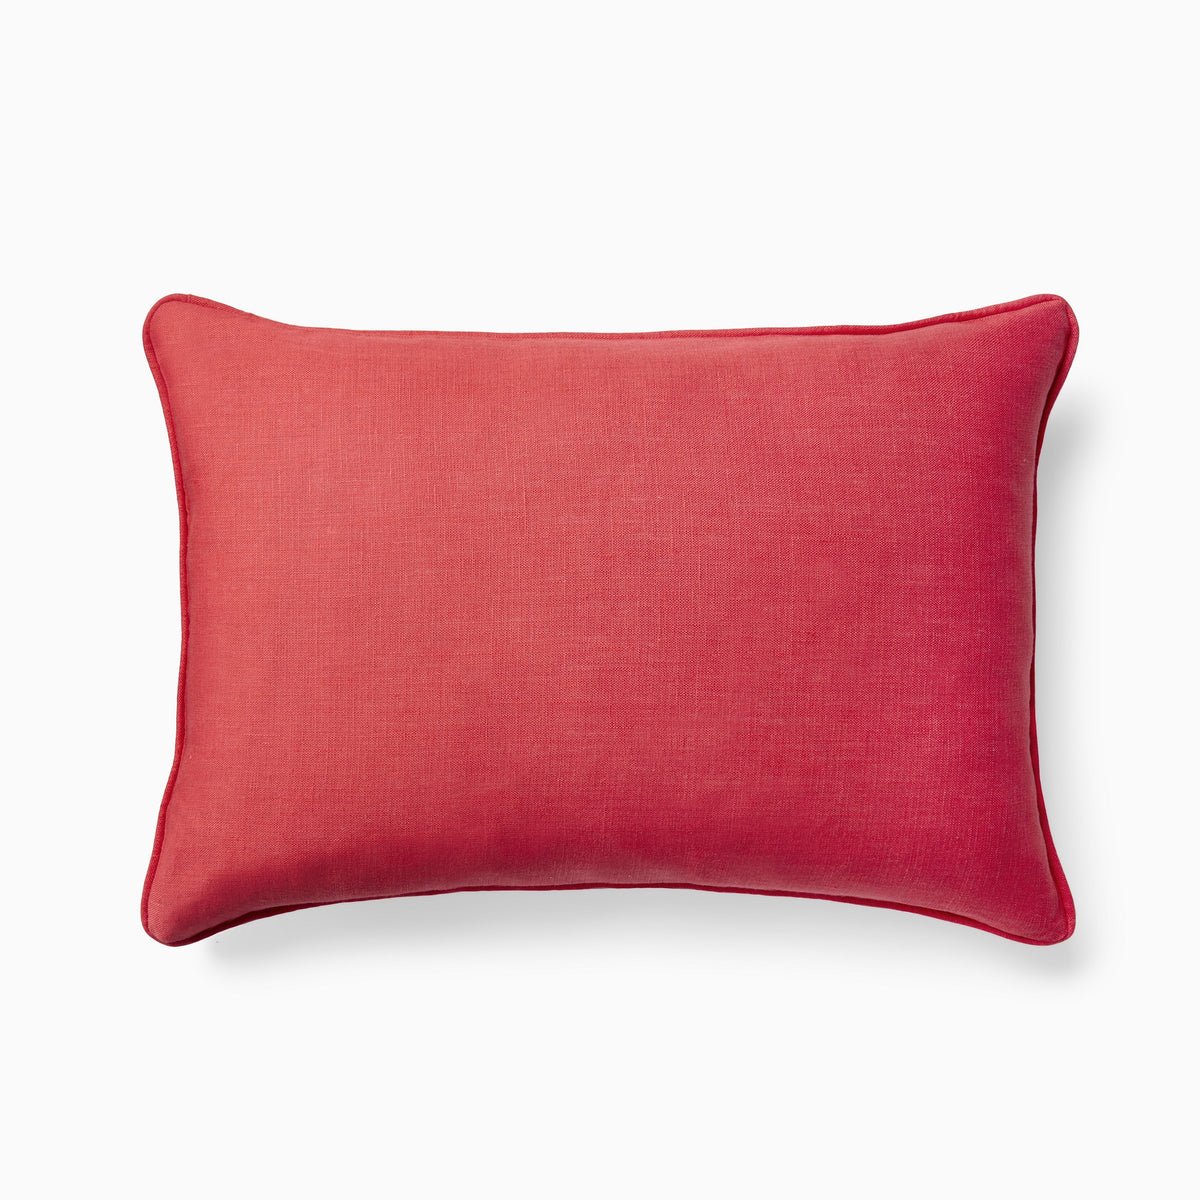 Clear Image of Sferra Manarola Decorative Pillow in Crimson/Poppy Back